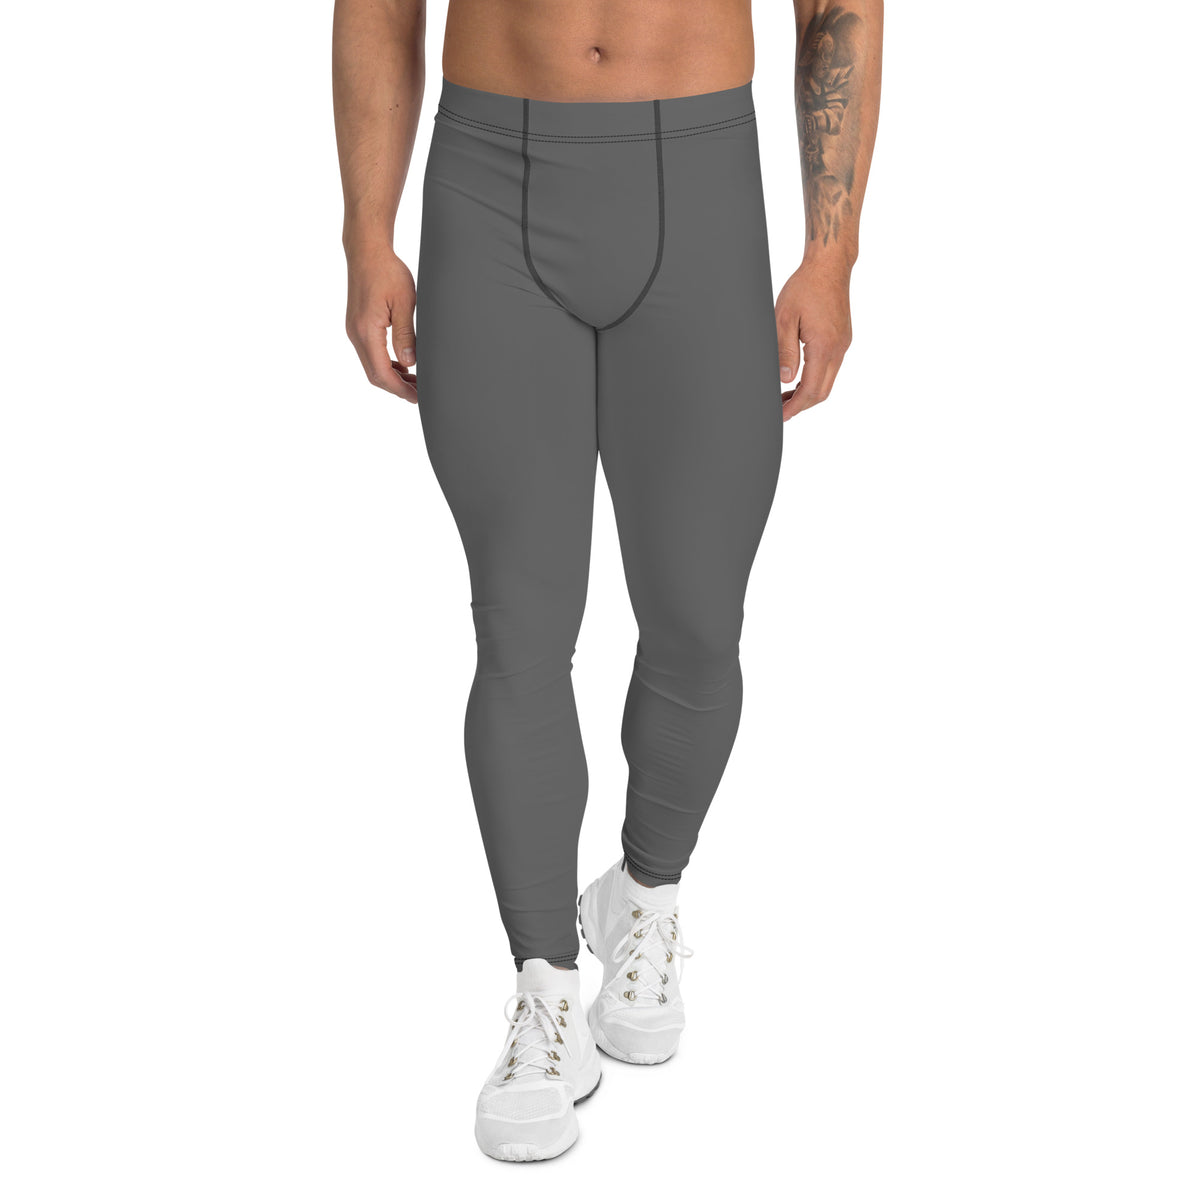 FDX Women's Compression Base layer Top Skin Fit Shirt + Leggings pants set  tight